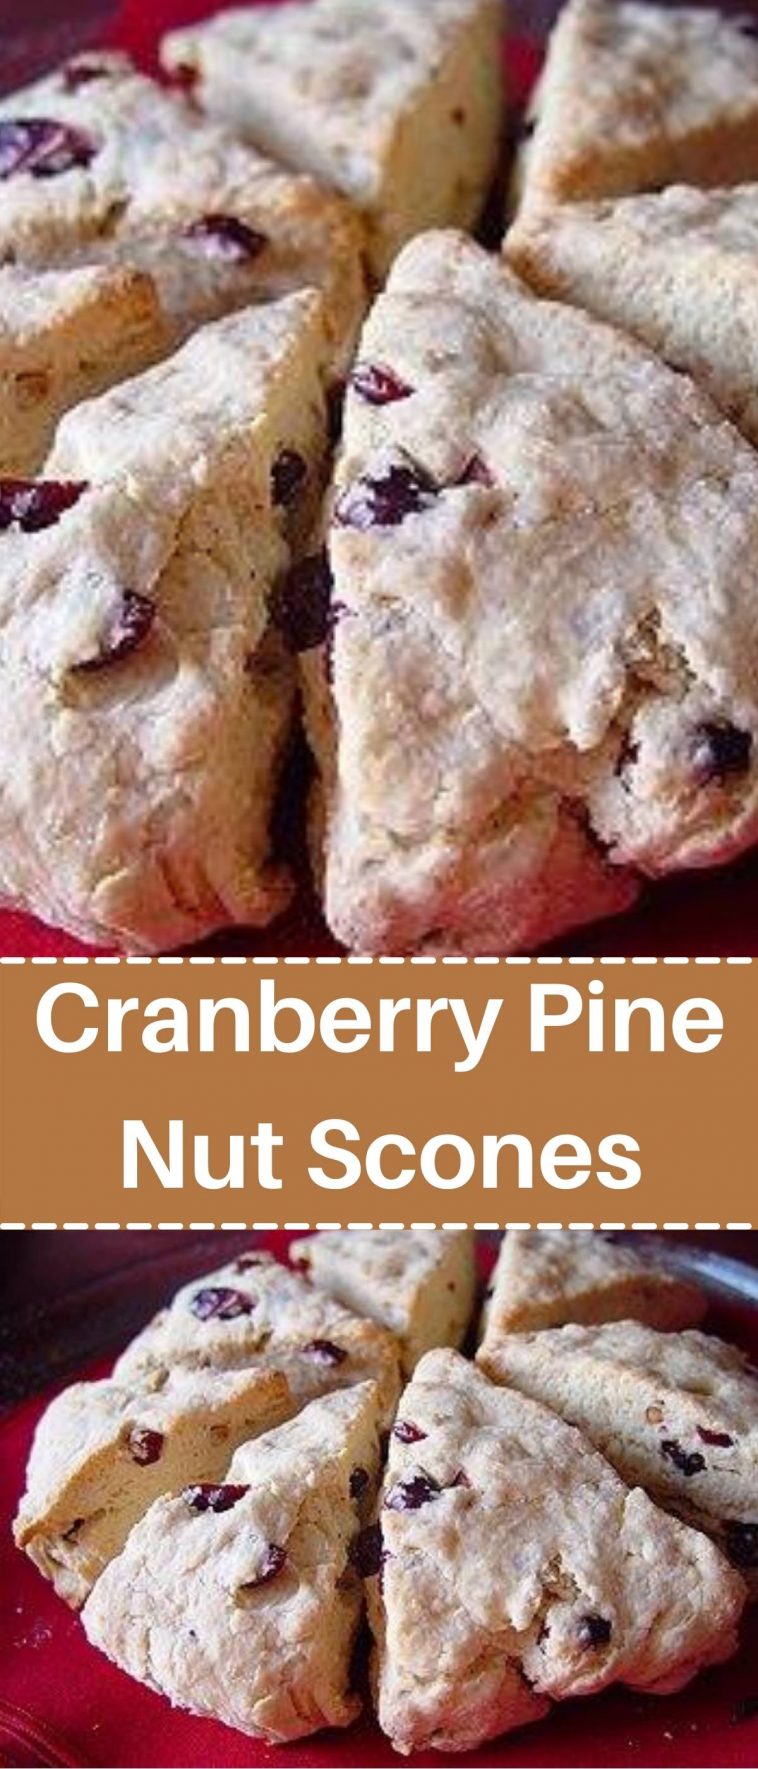 Cranberry Pine Nut Scones